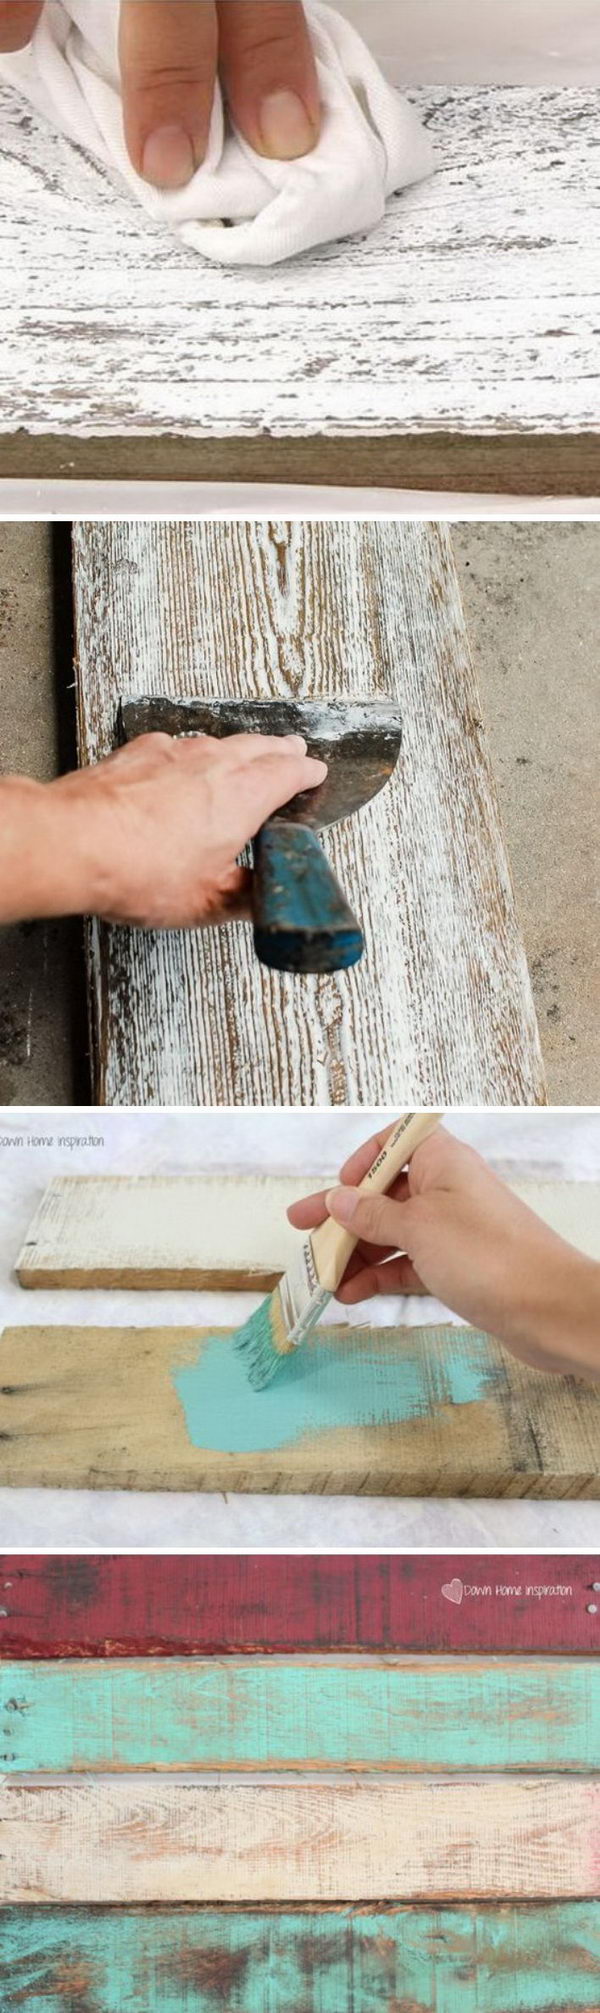 DIY ideas to make wood look old, weathered or distressed. 